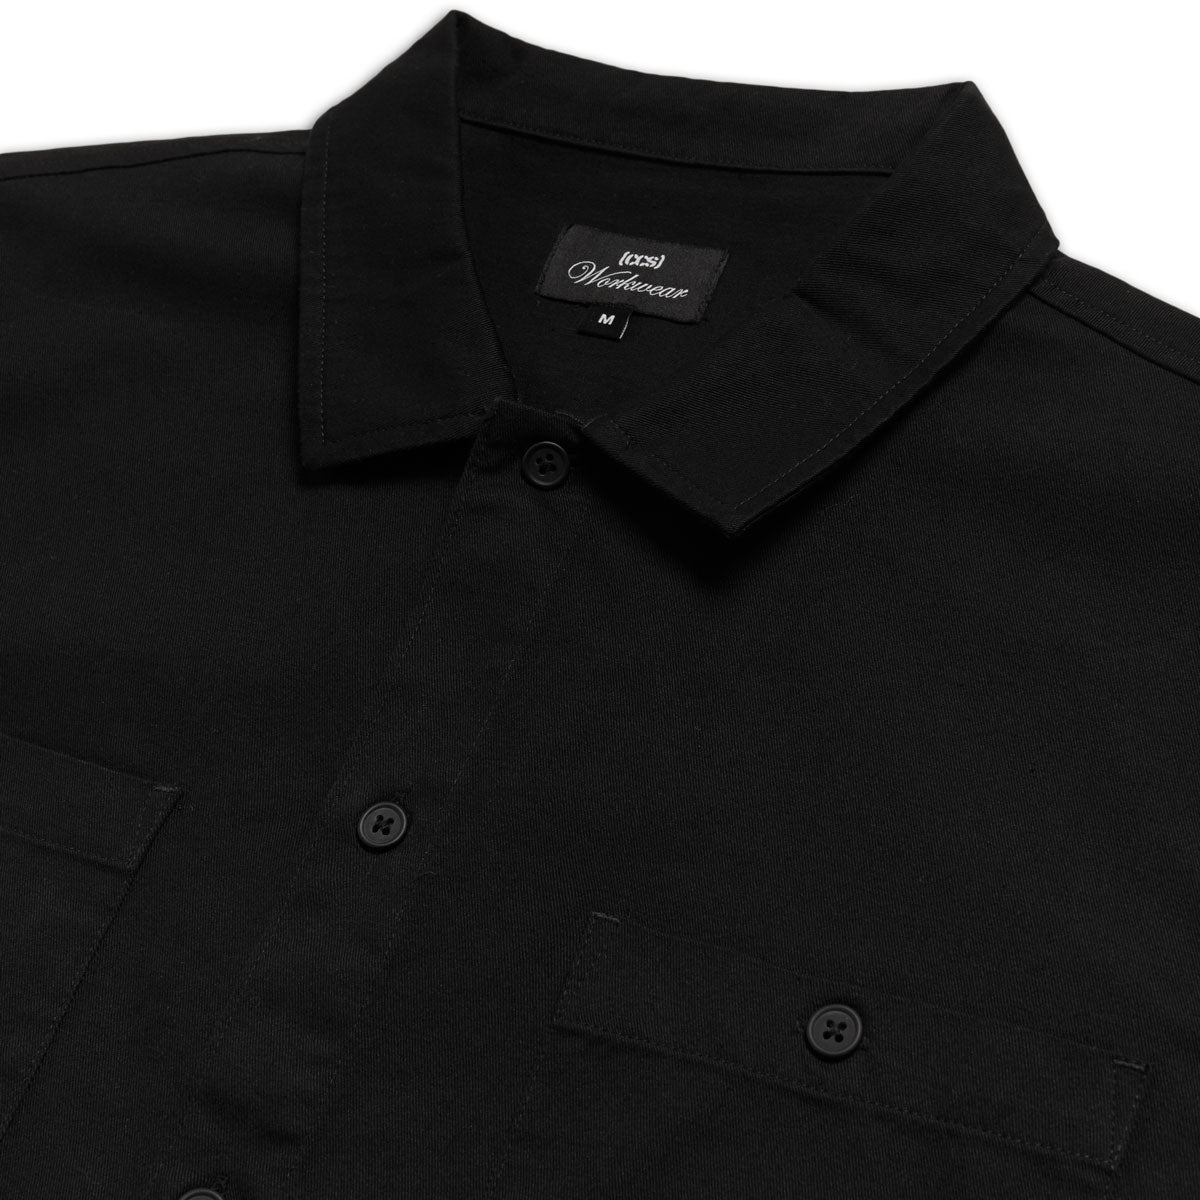 CCS Custom Embroidered Work Shirt - Black image 4